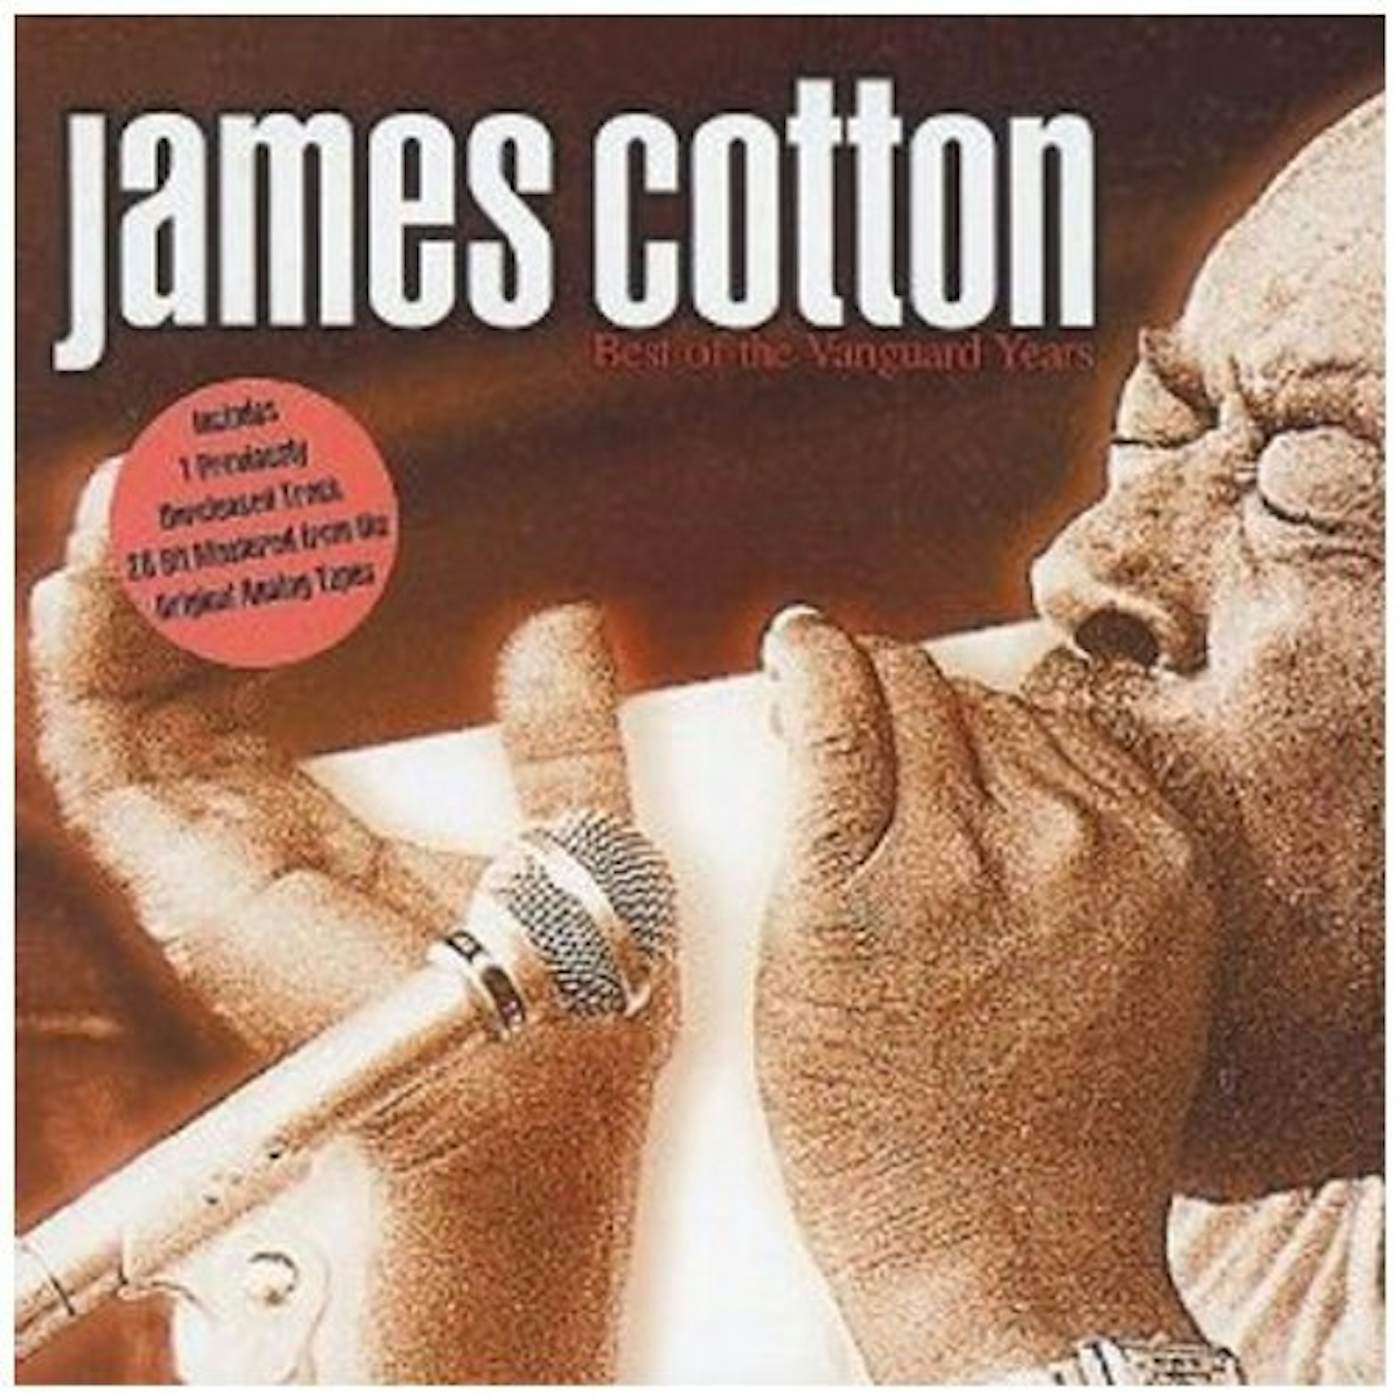 James Cotton BEST OF THE VANGUARD YEARS CD